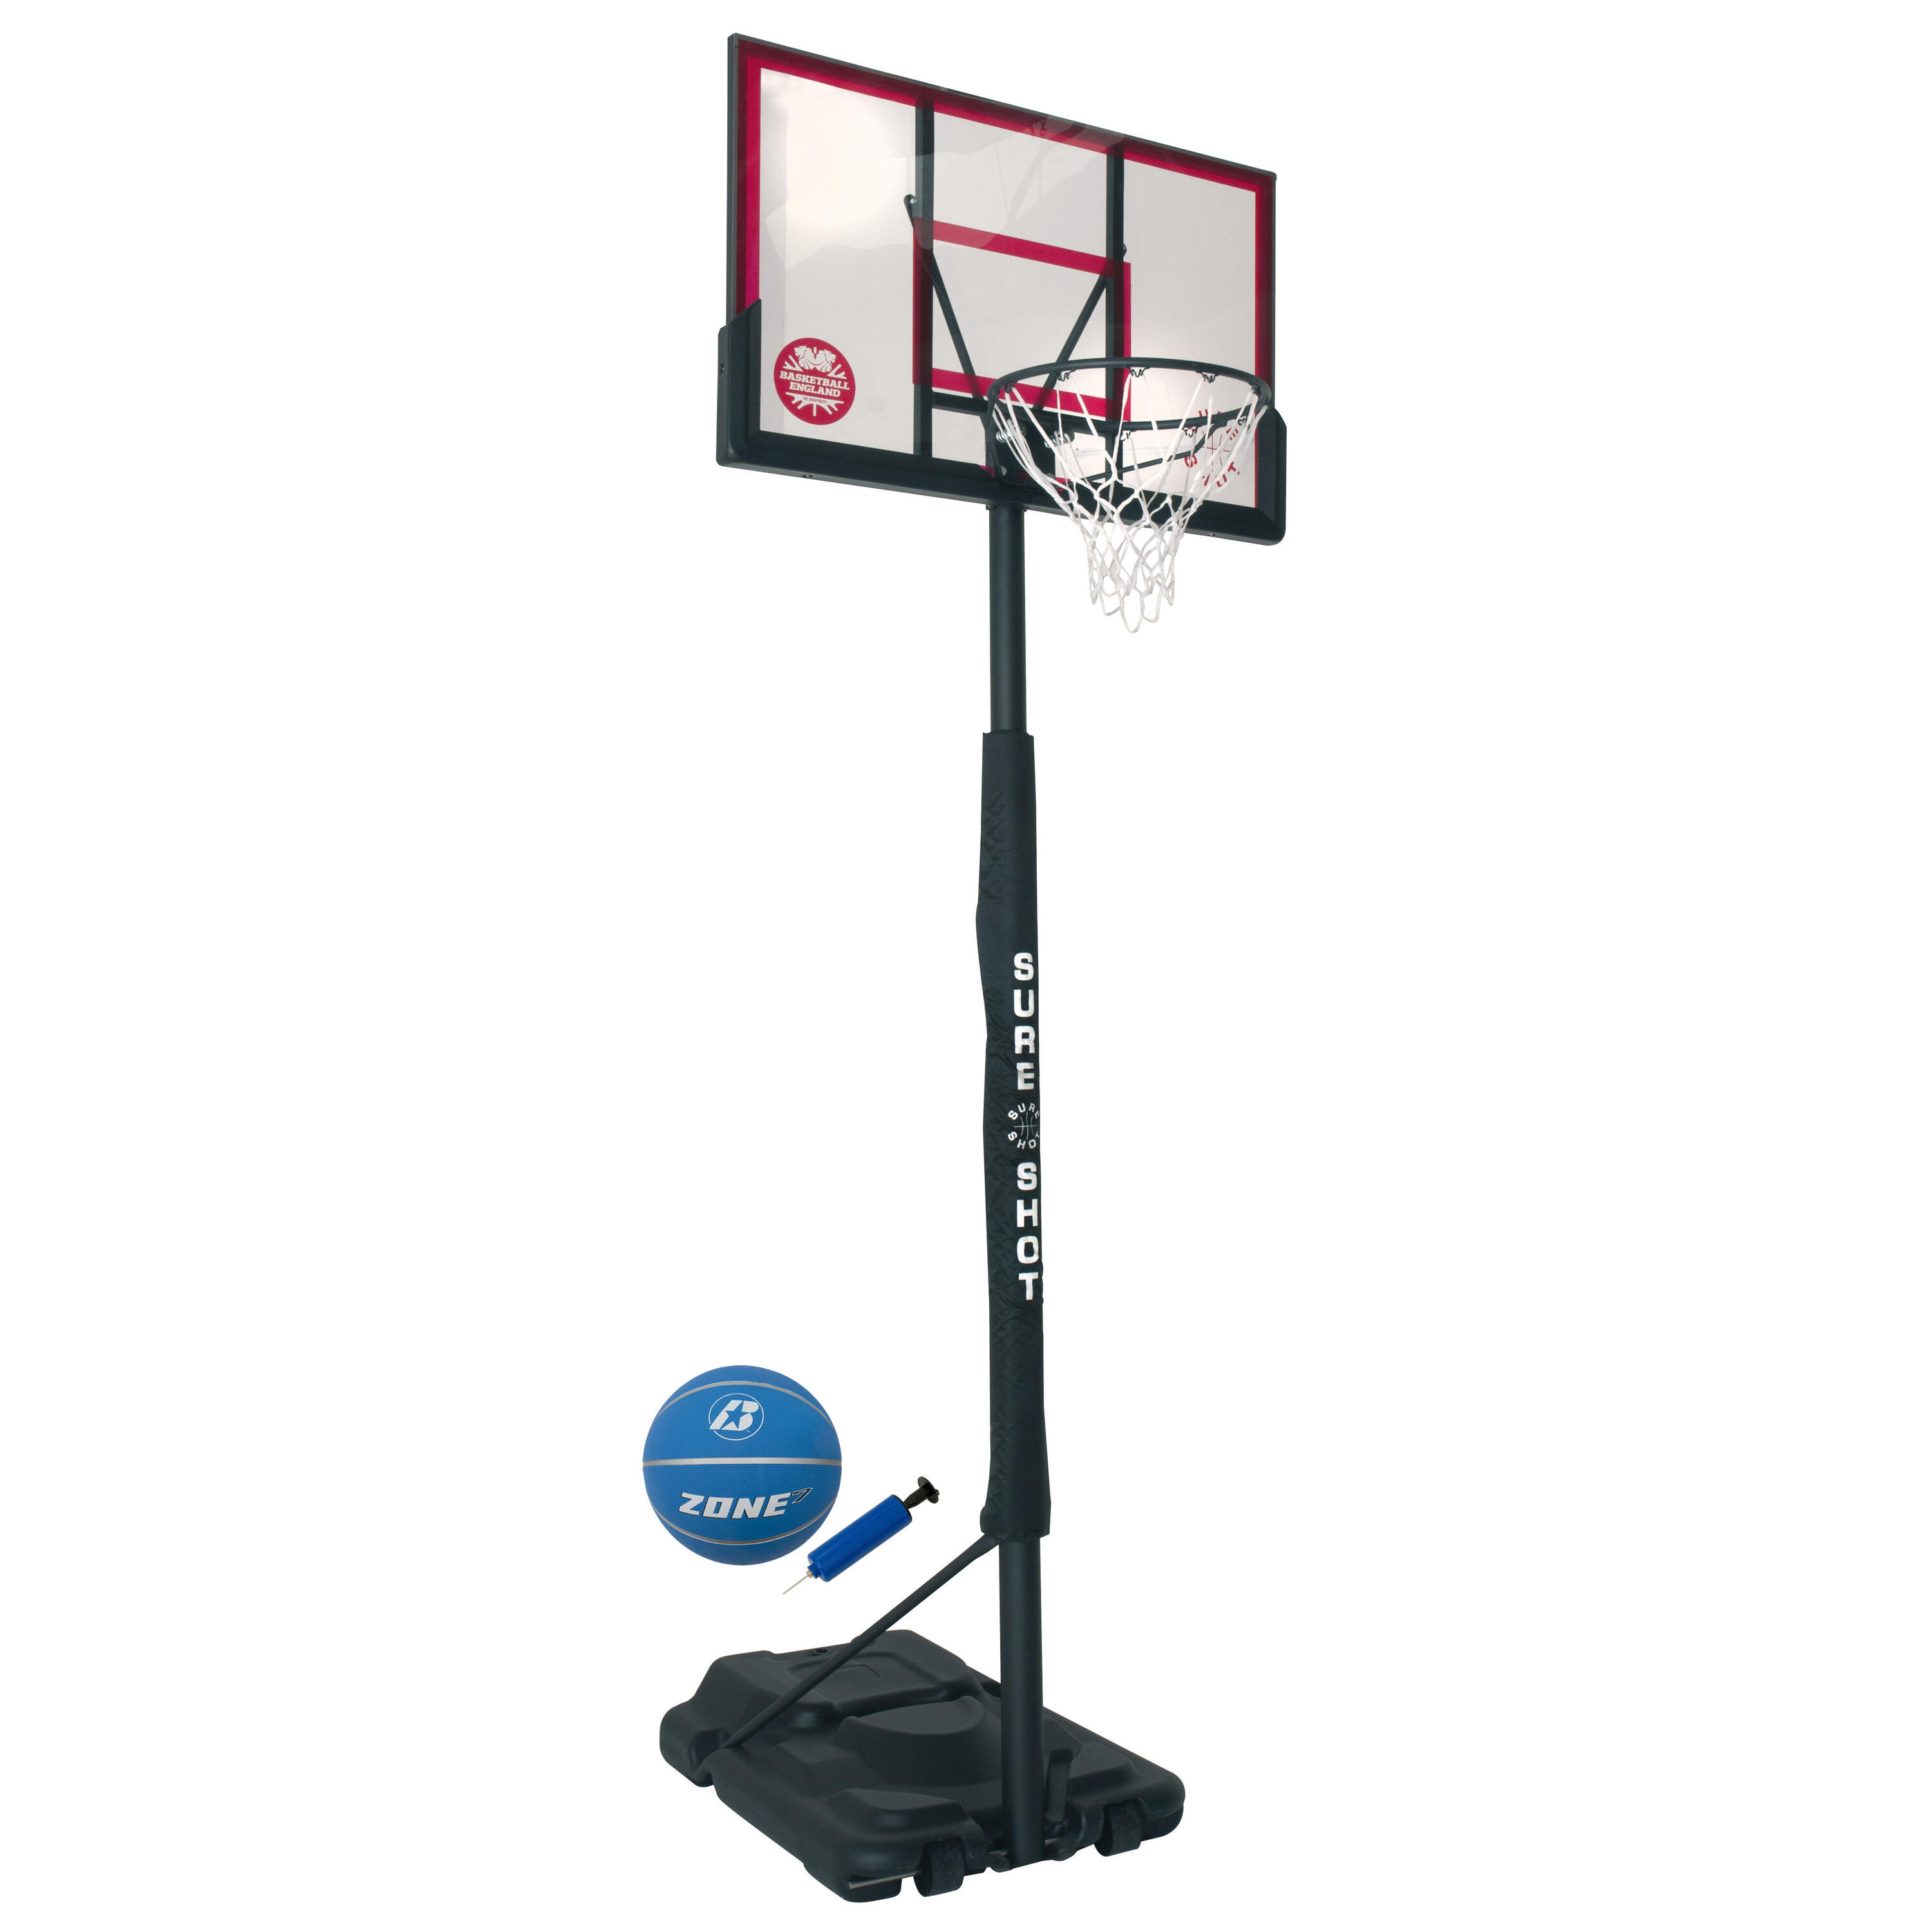 SURE SHOT Game Telescopic Basketball Set - Acrylic